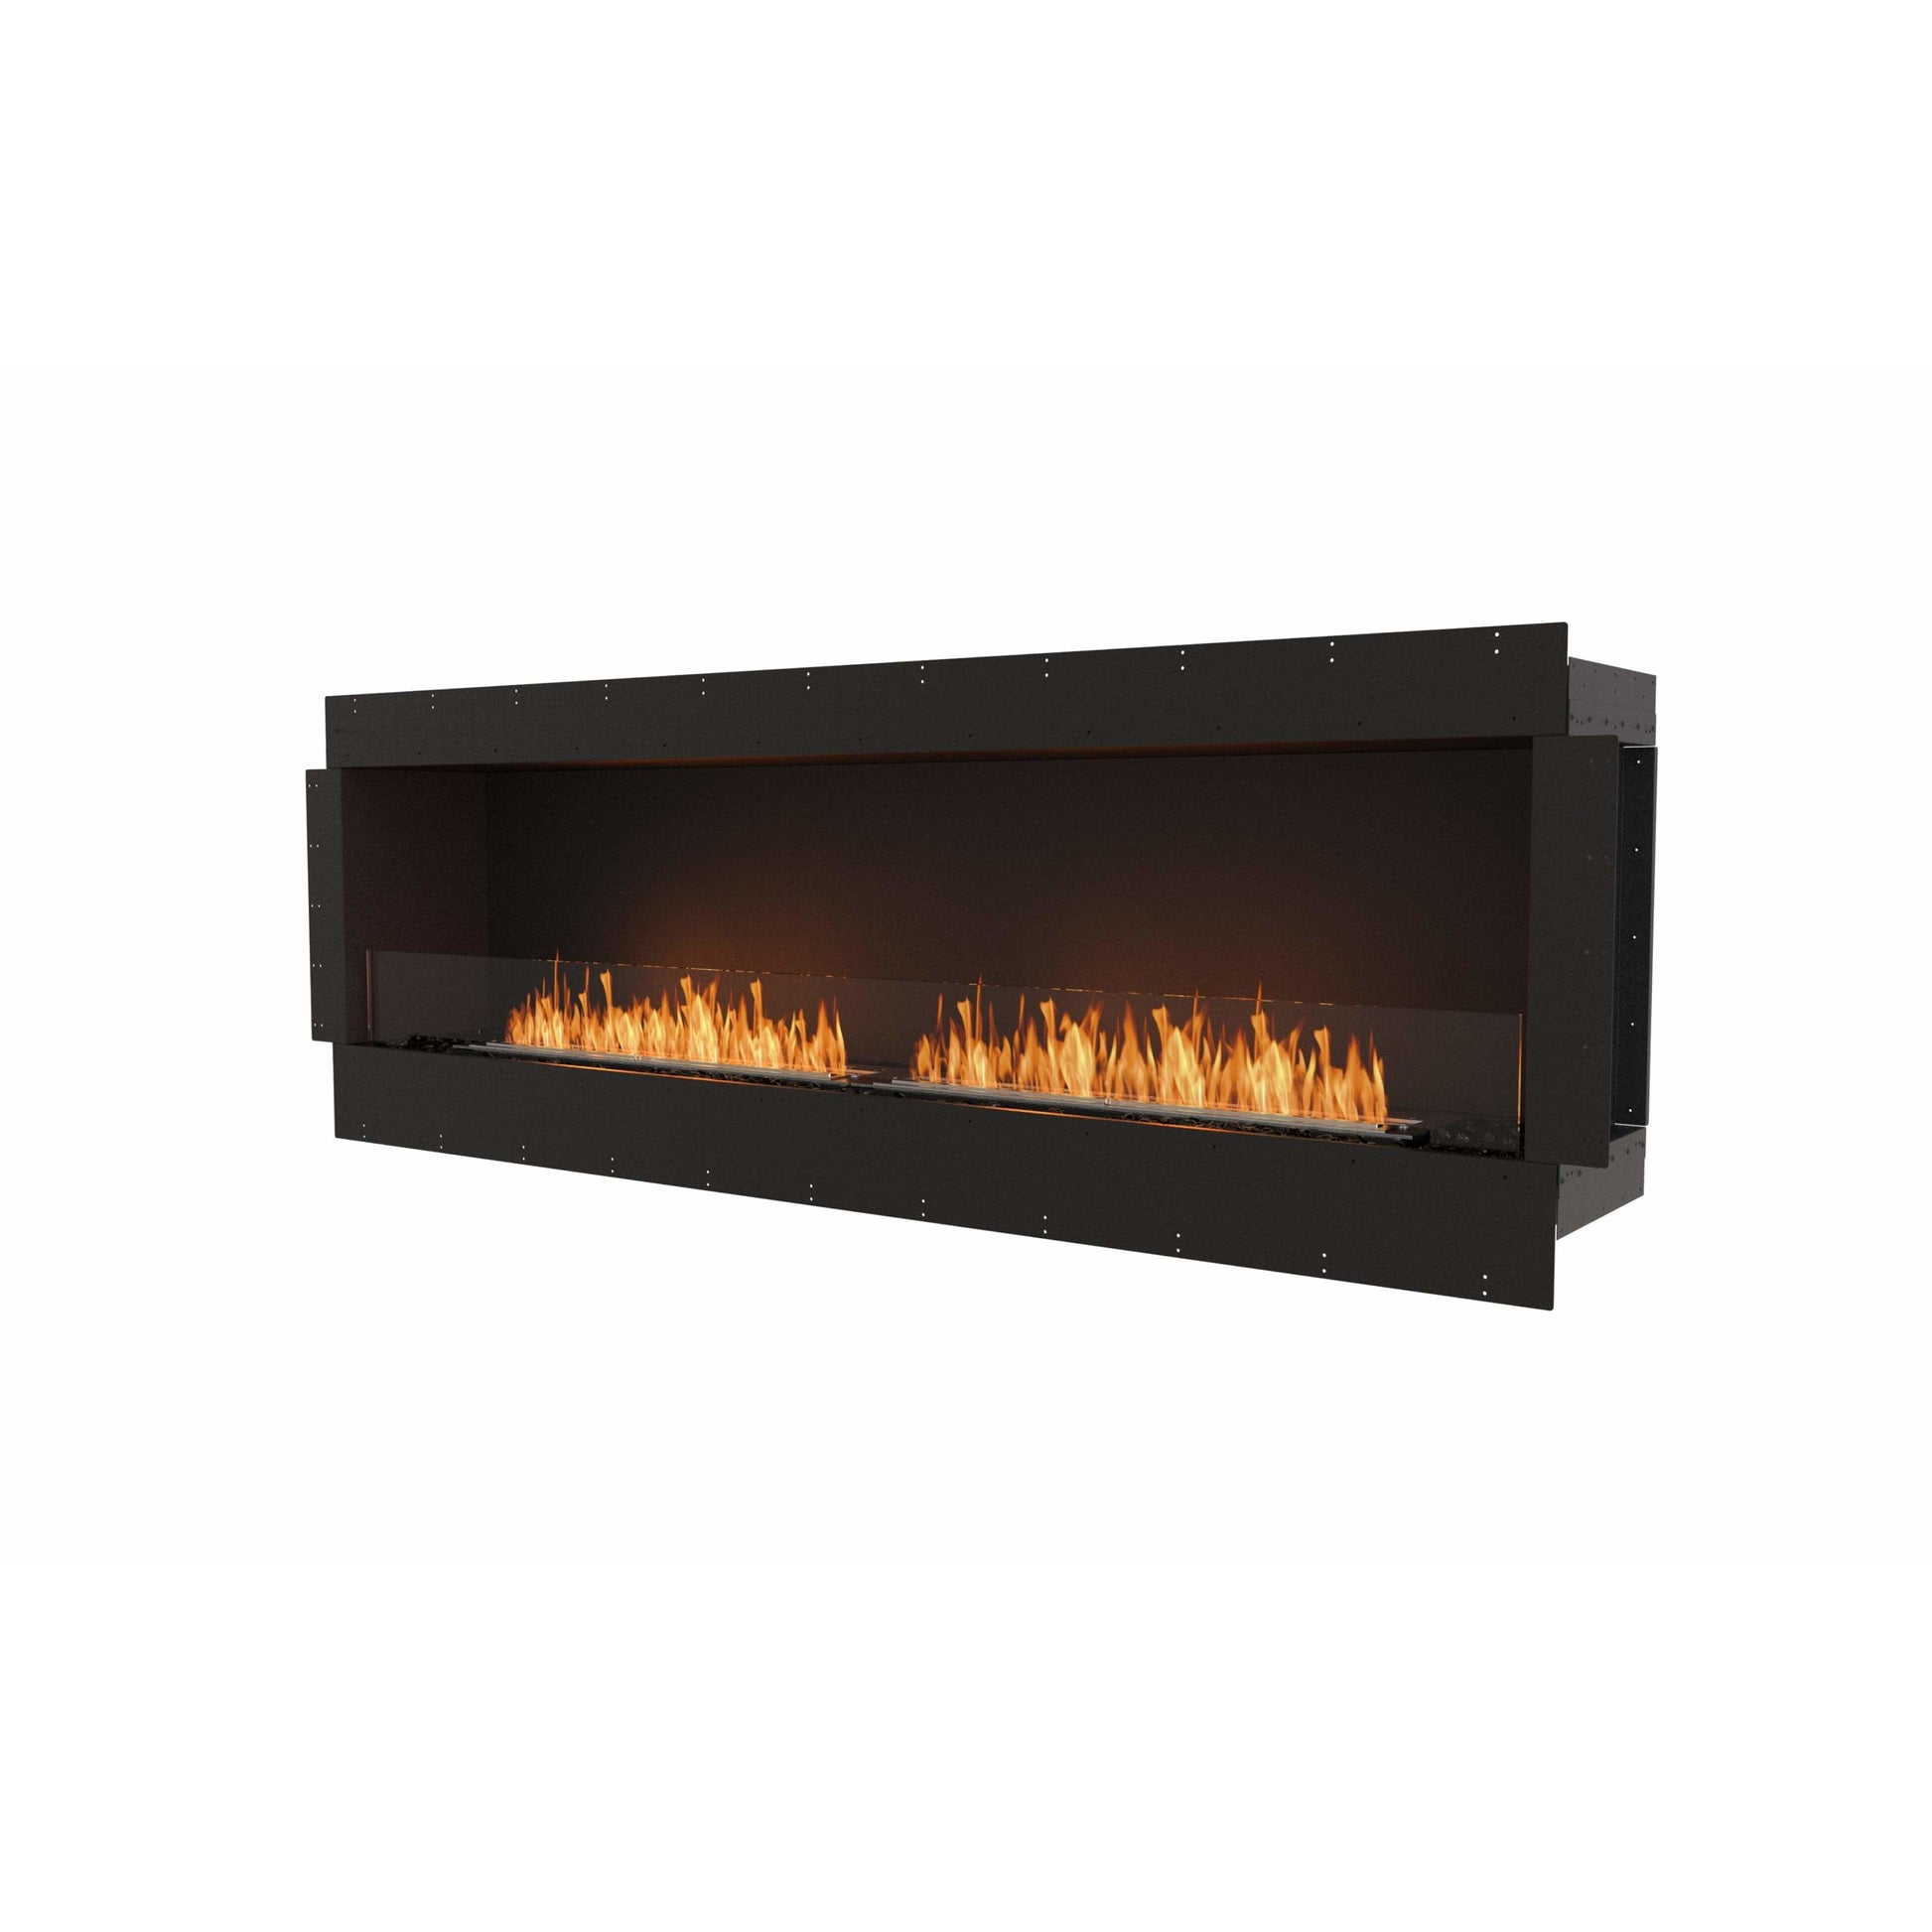 EcoSmart Flex 86ss; best modern, bio ethanol fireplace in black - 94.1 inches long wall fireplace for sale